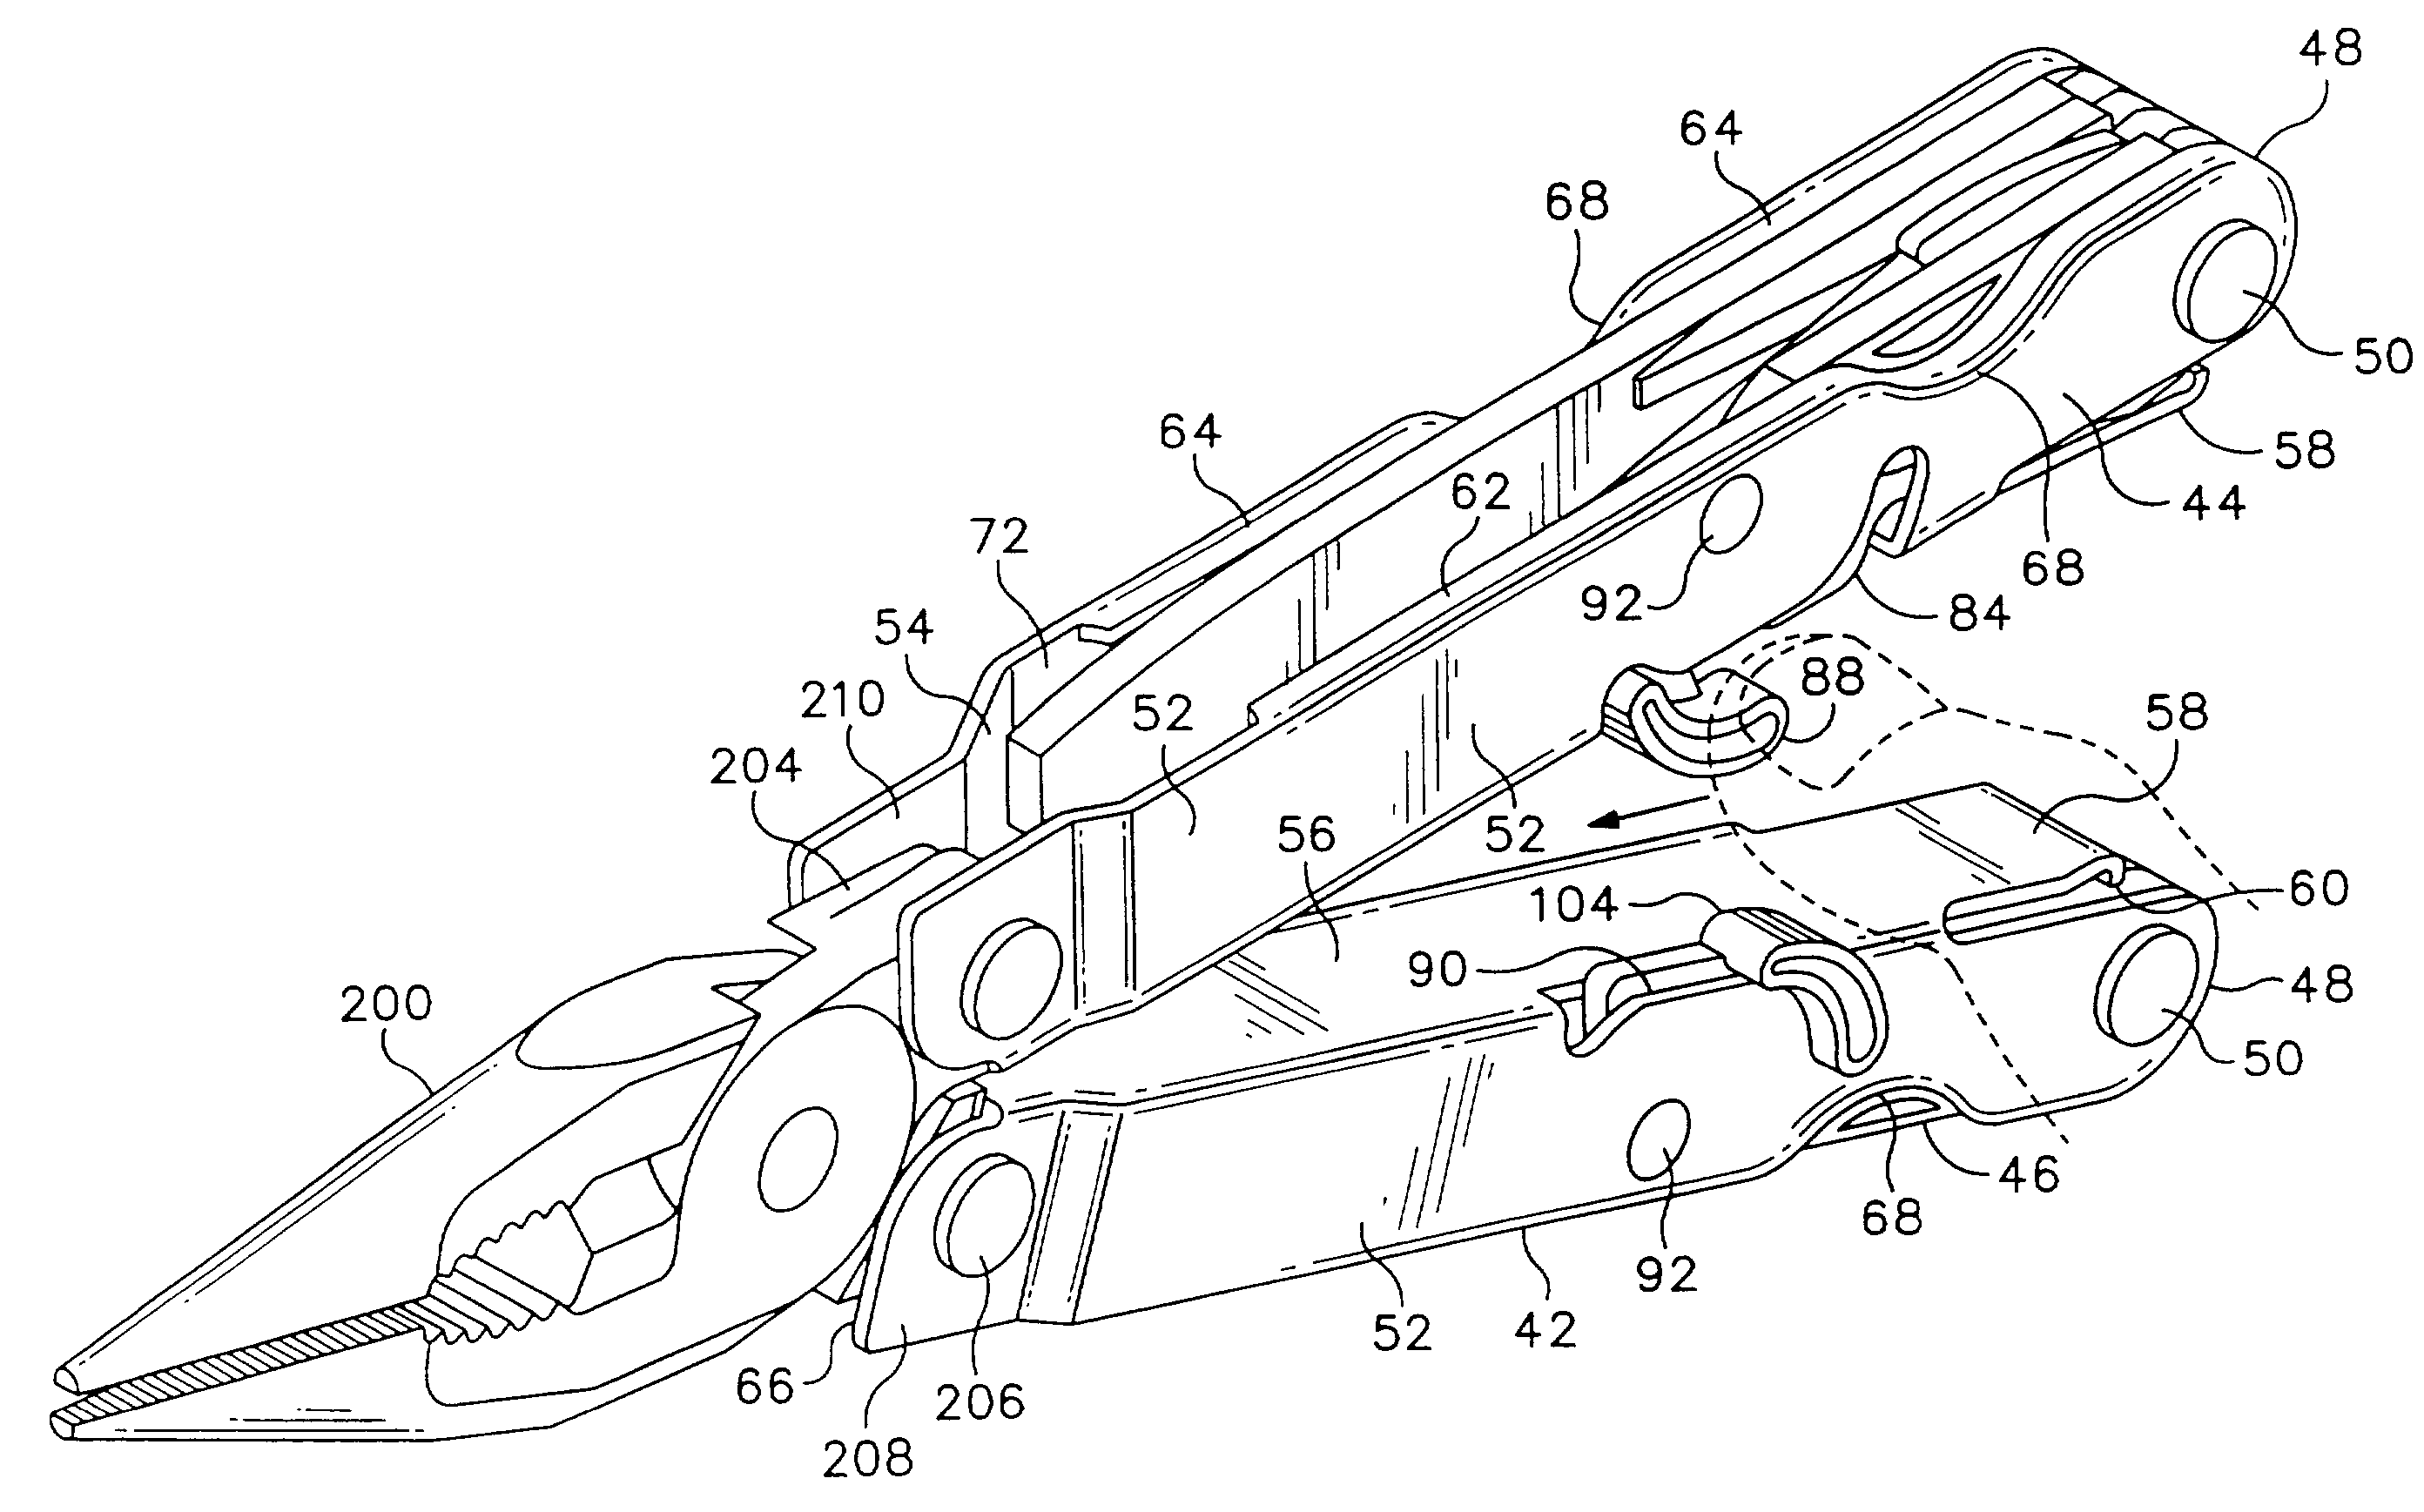 Folding multipurpose tool including blade lock release mechanism